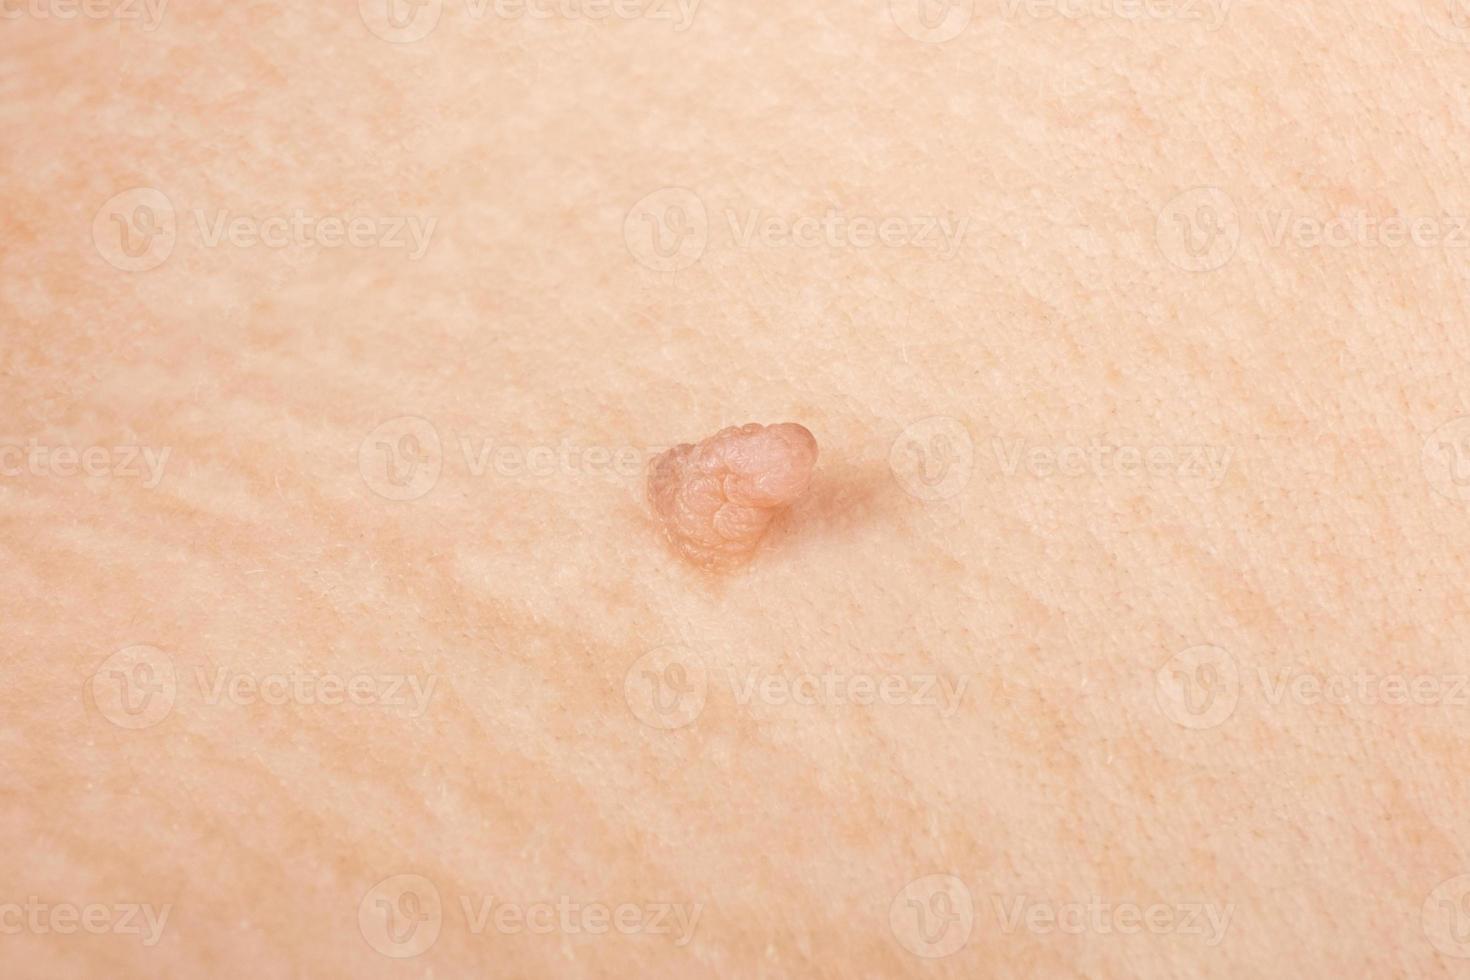 papilloma close up, big birthmark on the skin photo